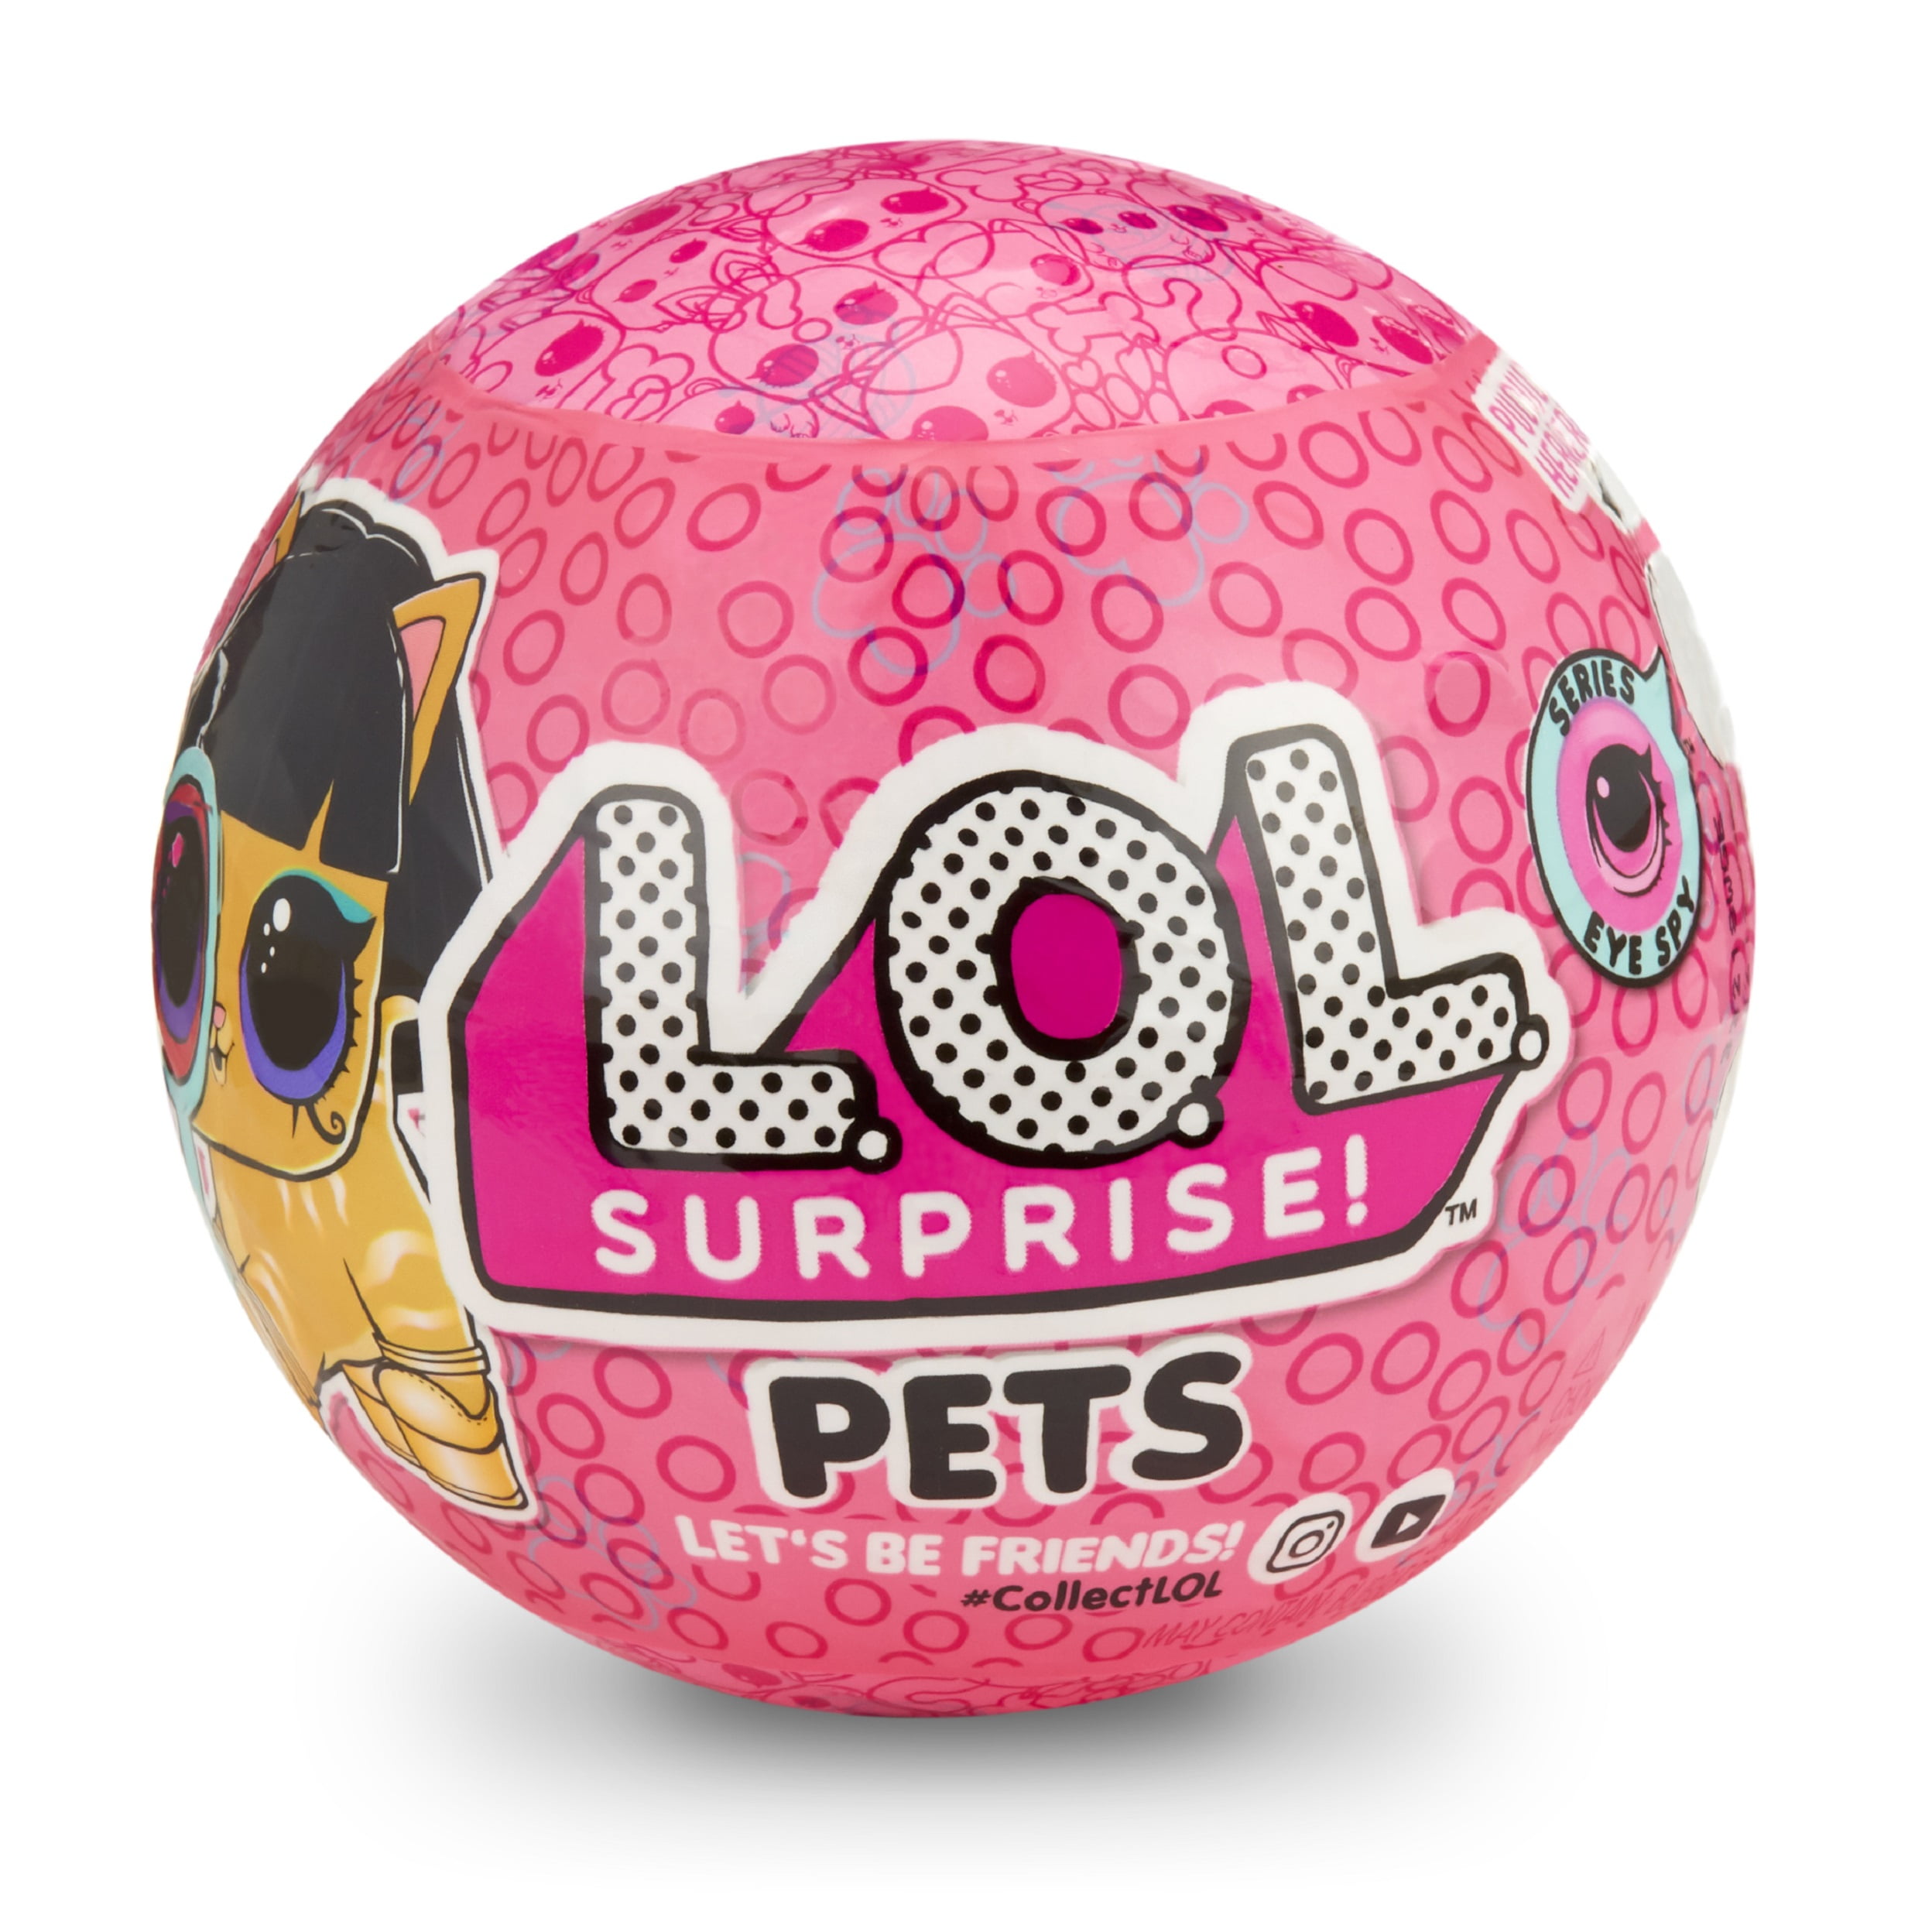 L.O.L. Surprise! Pets Eye Spy Series Assortment